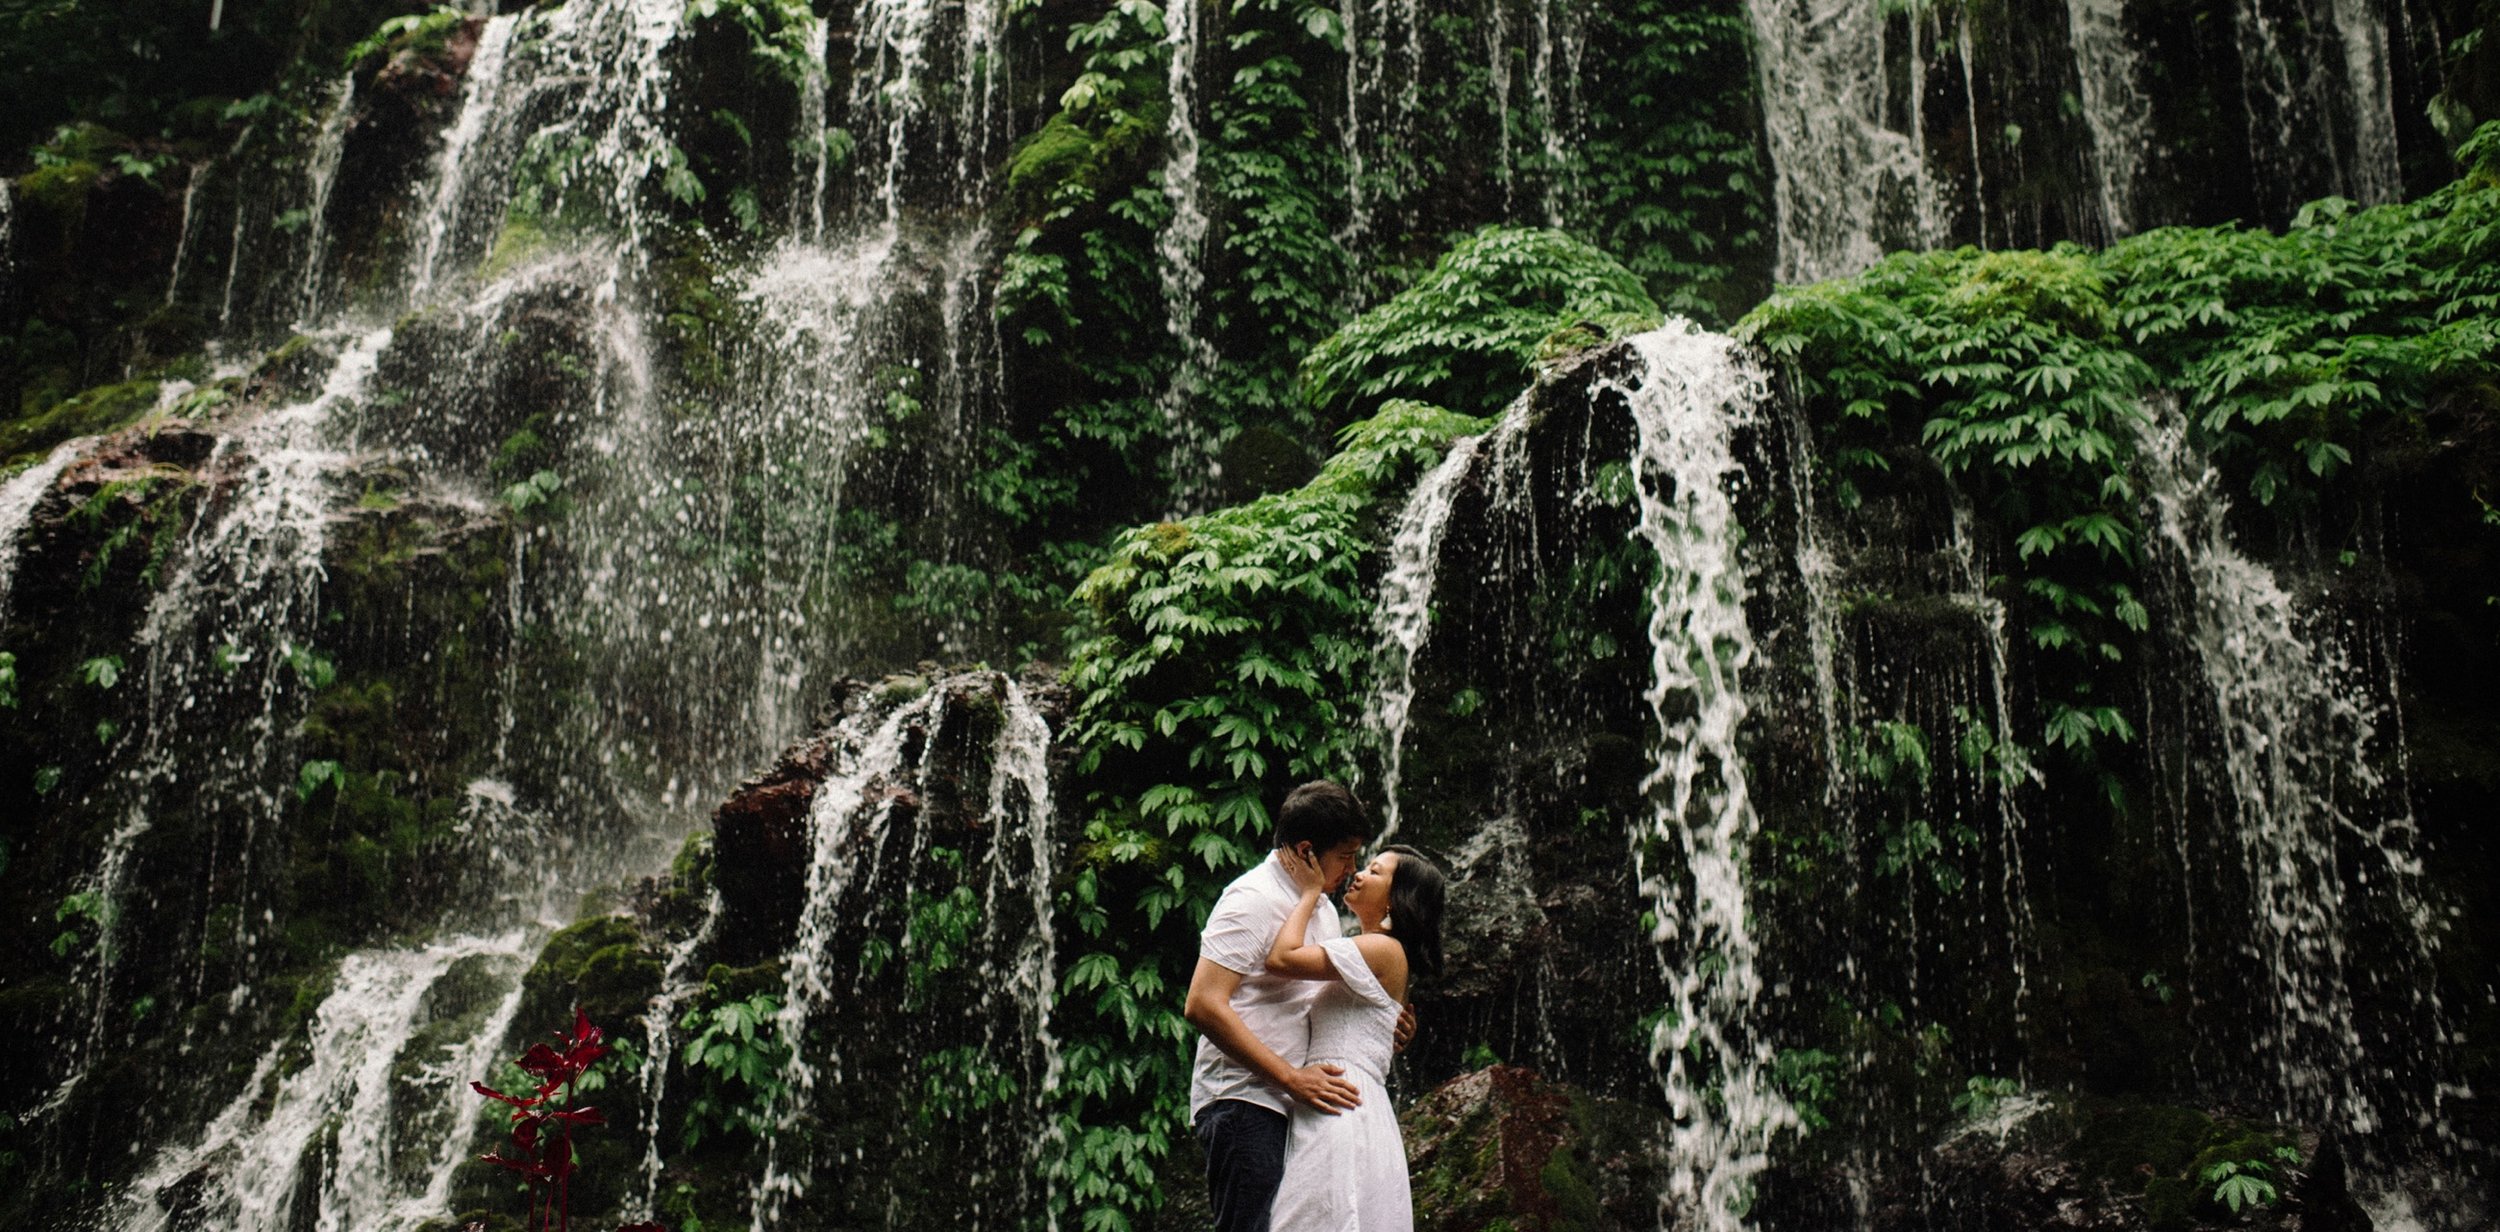 Ubud-Bali-waterfall-honeymoon-35.jpg